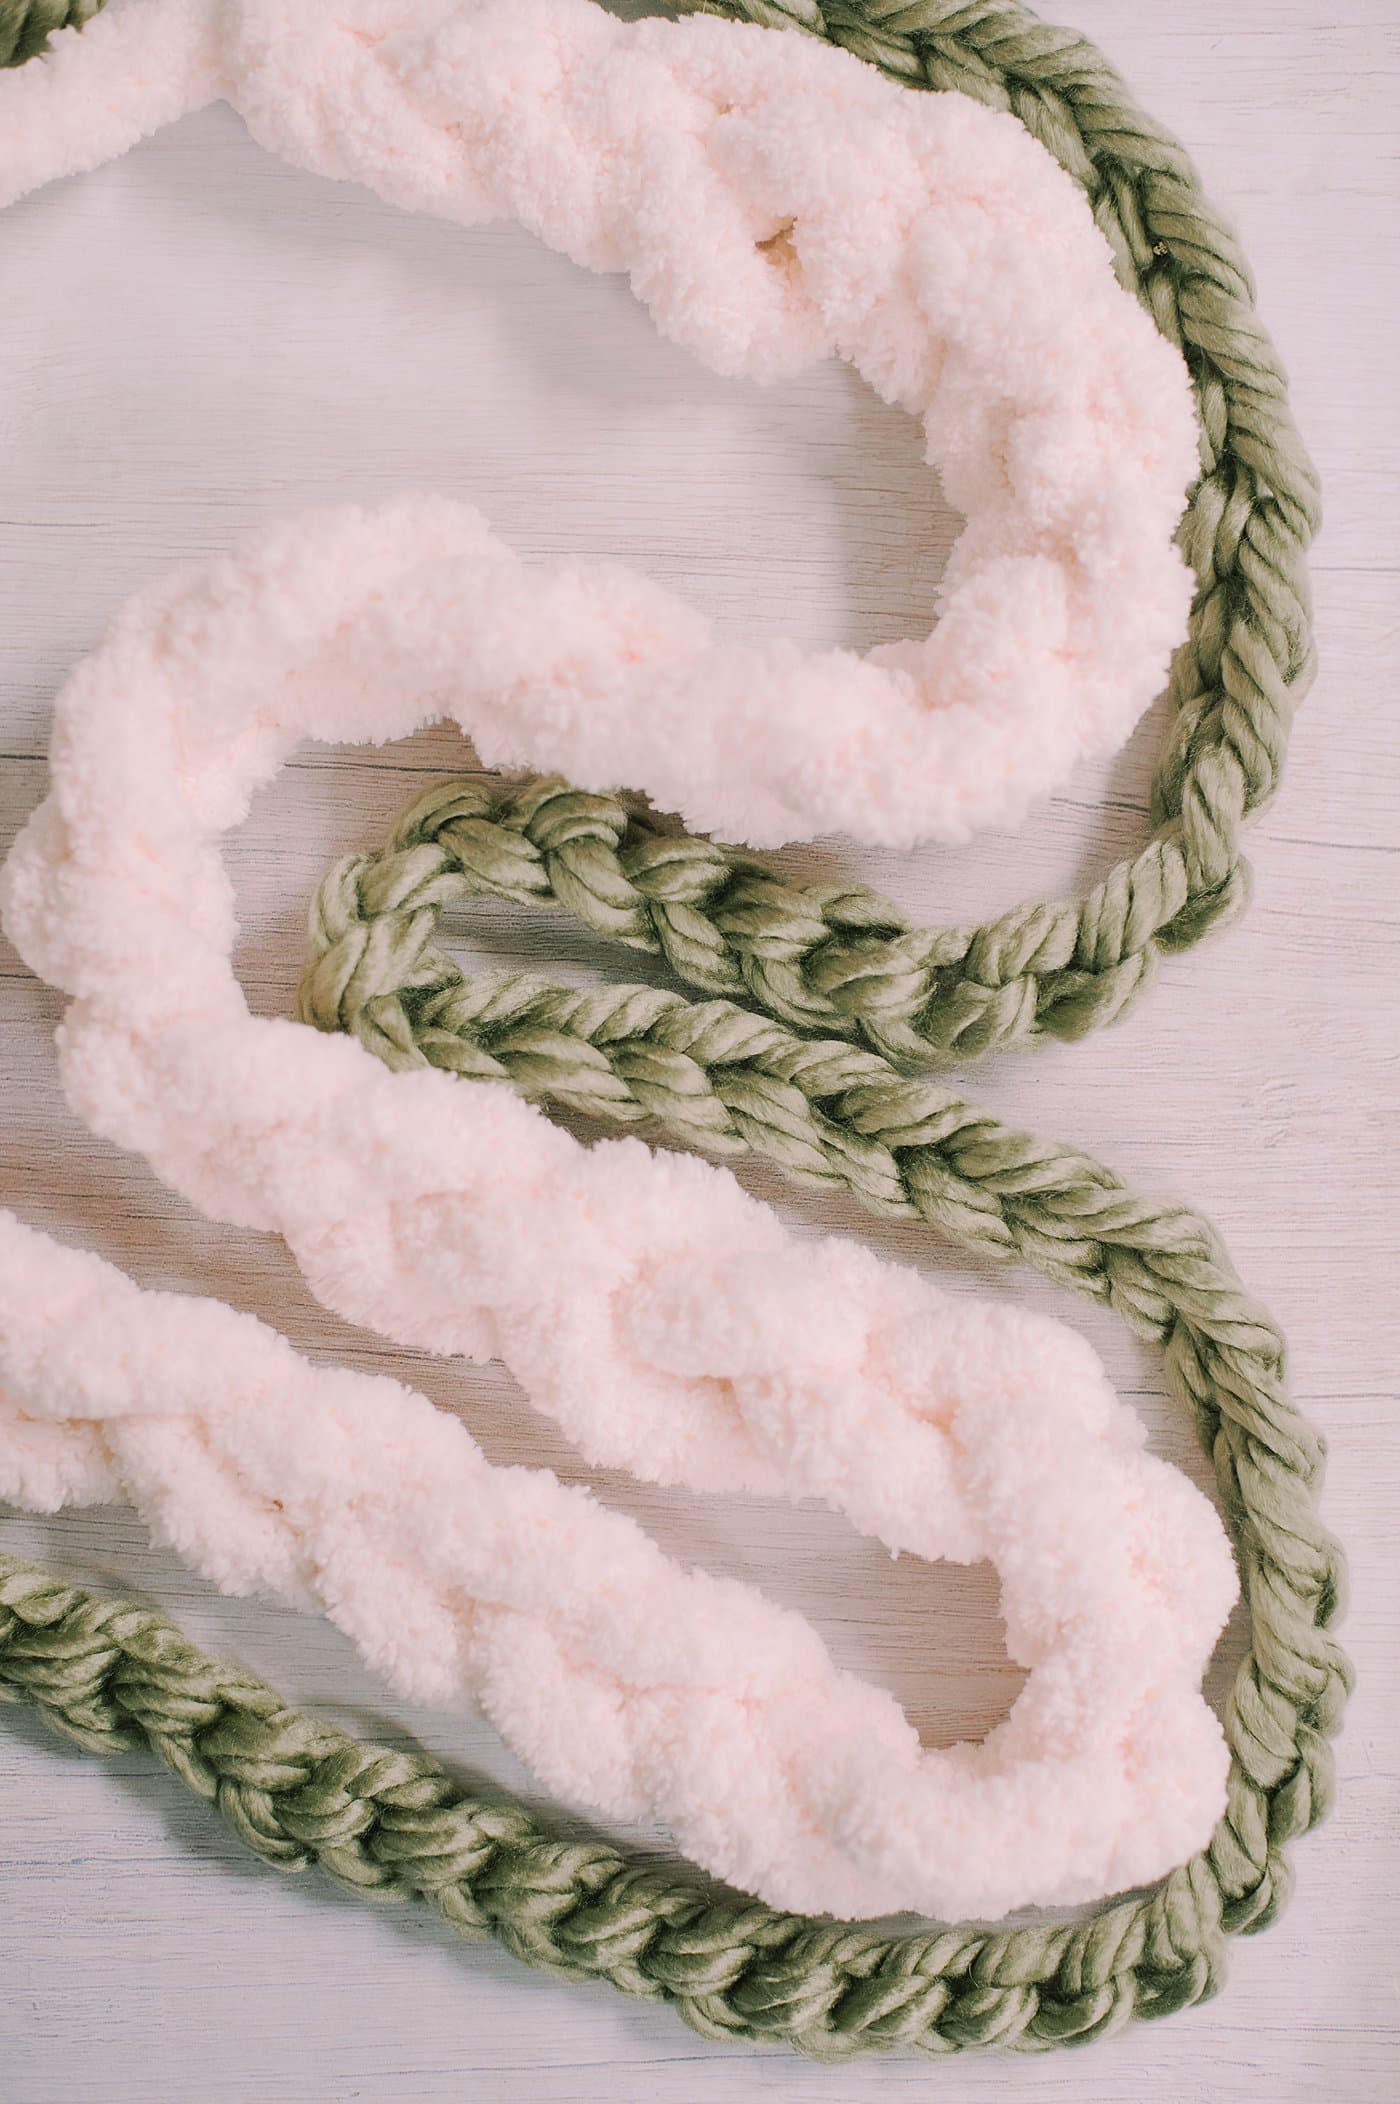 DIY crochet chain stitch garland using chunky yarn.